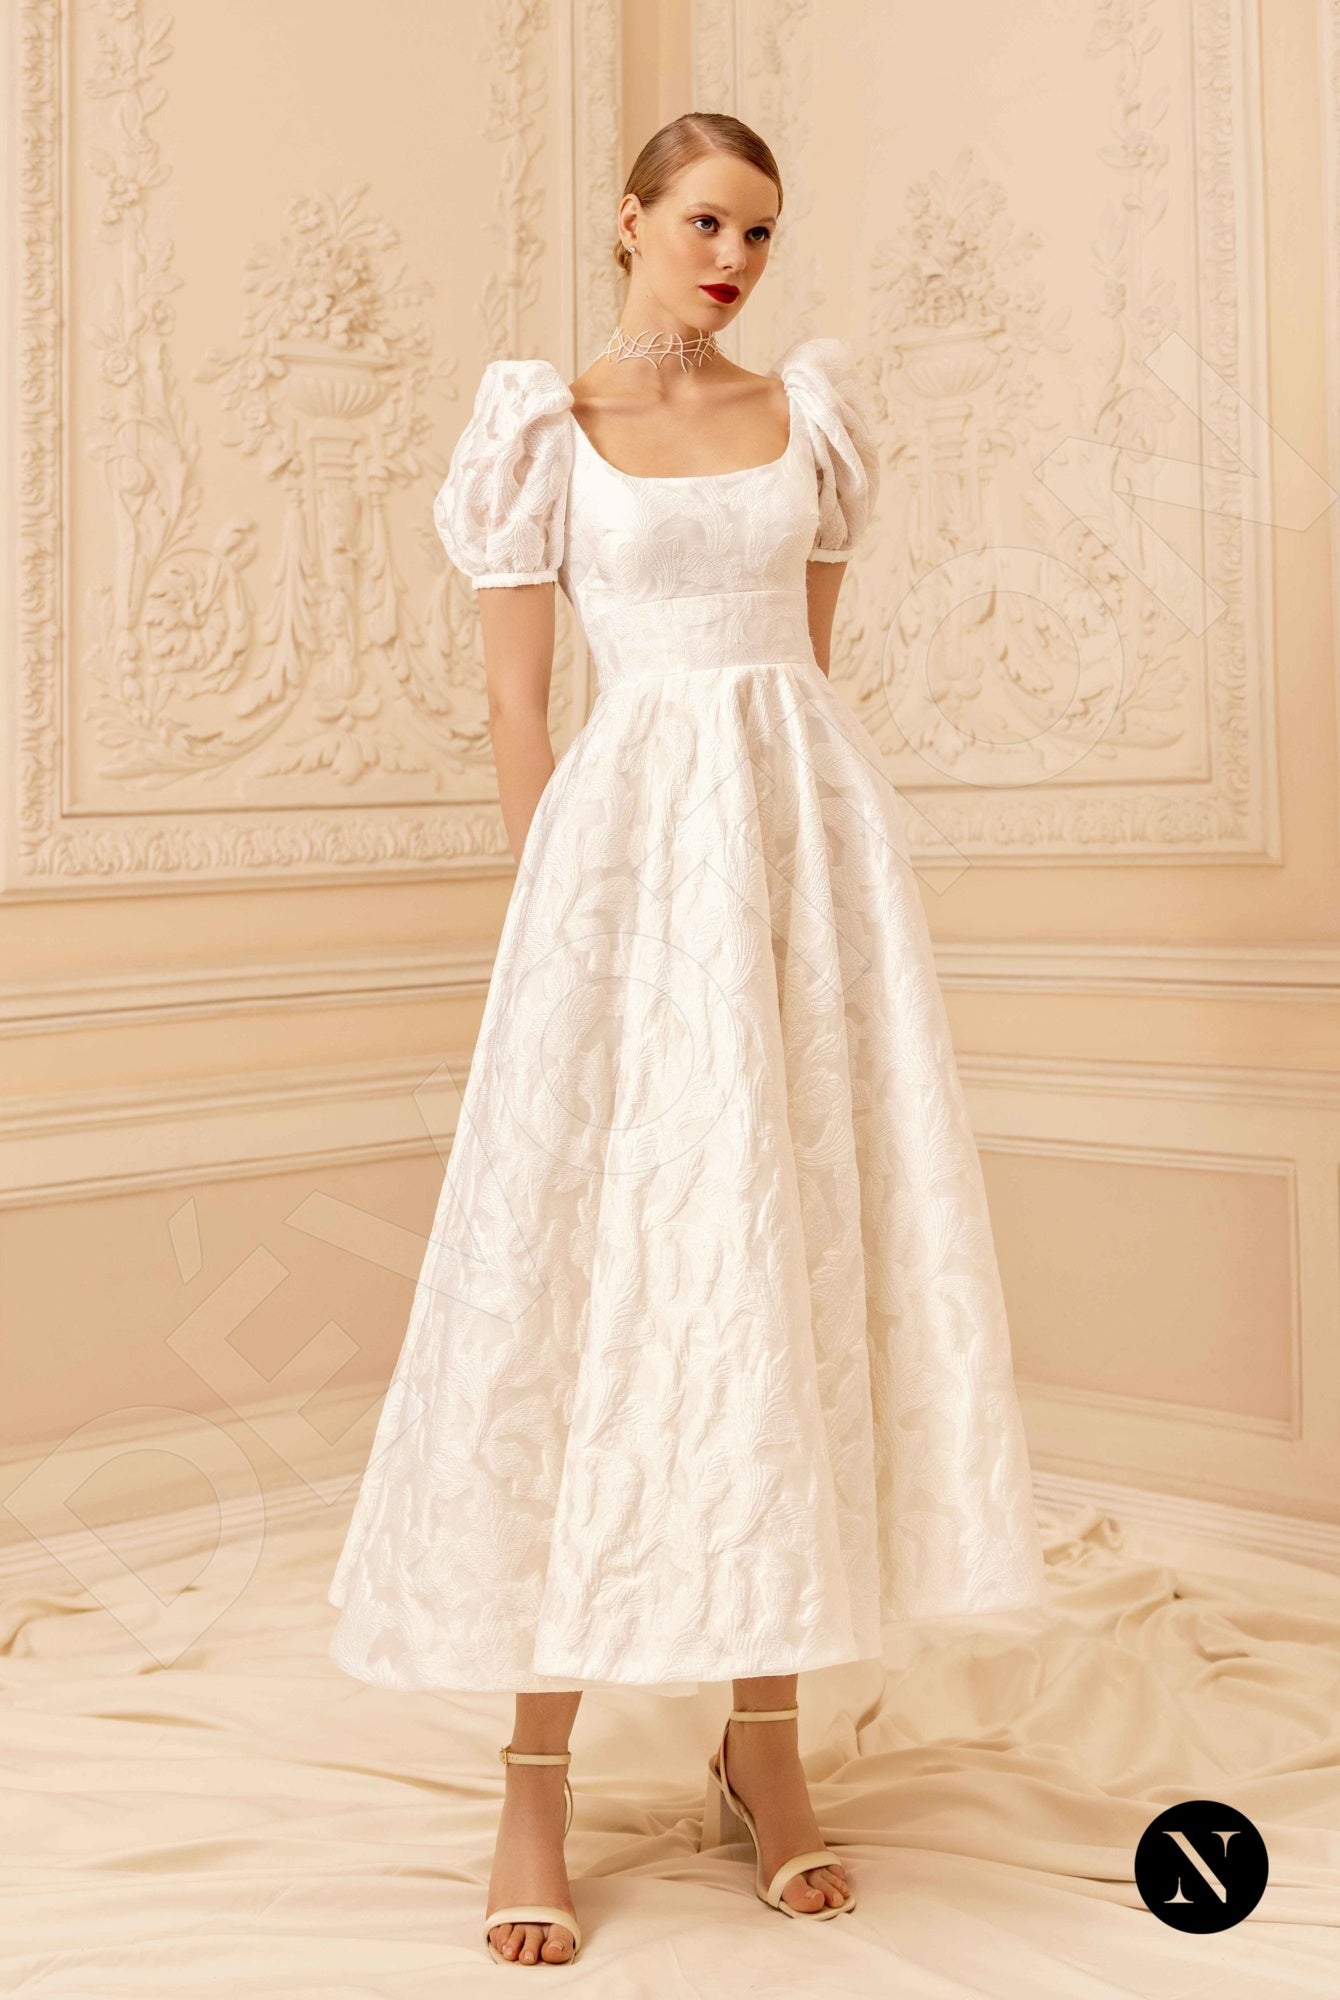 Catherine Open back A-line Short/ Cap sleeve Wedding Dress Front